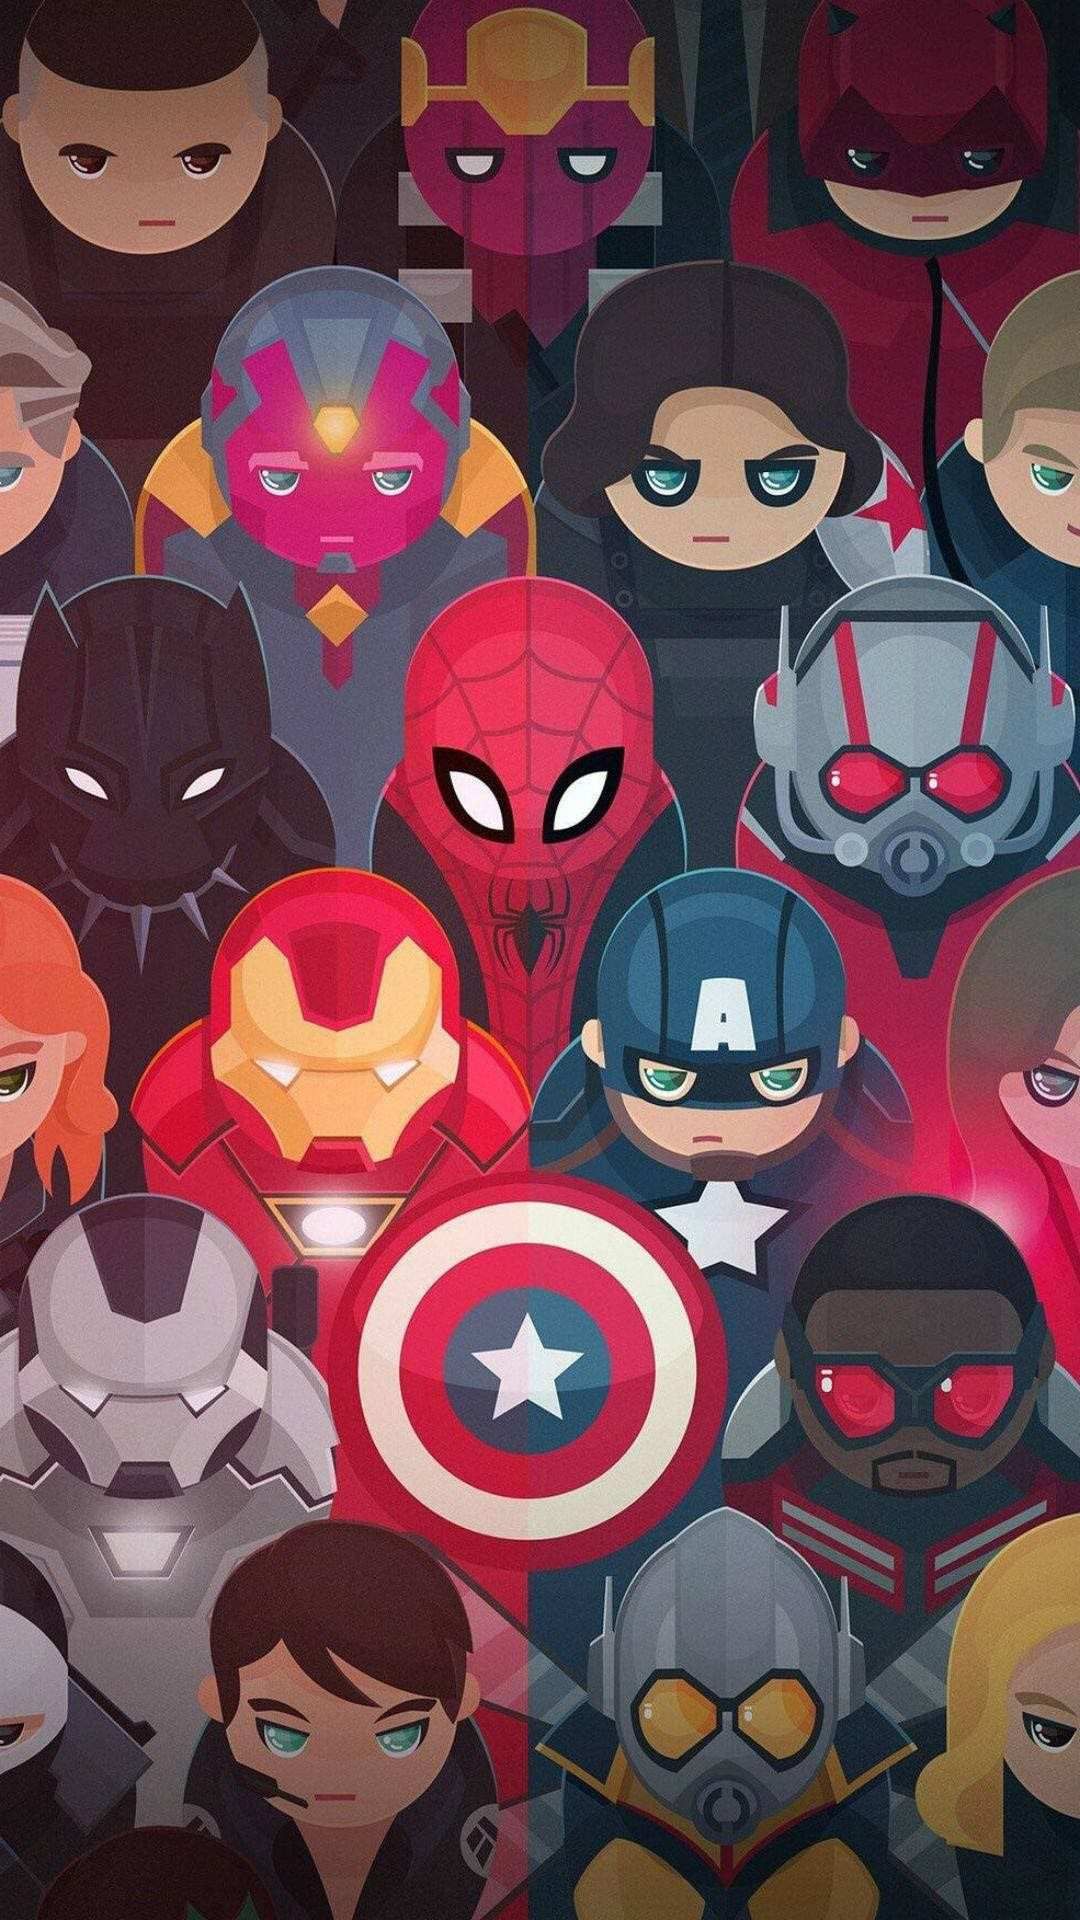 33+] Avengers Cartoon iPhone Wallpapers - WallpaperSafari